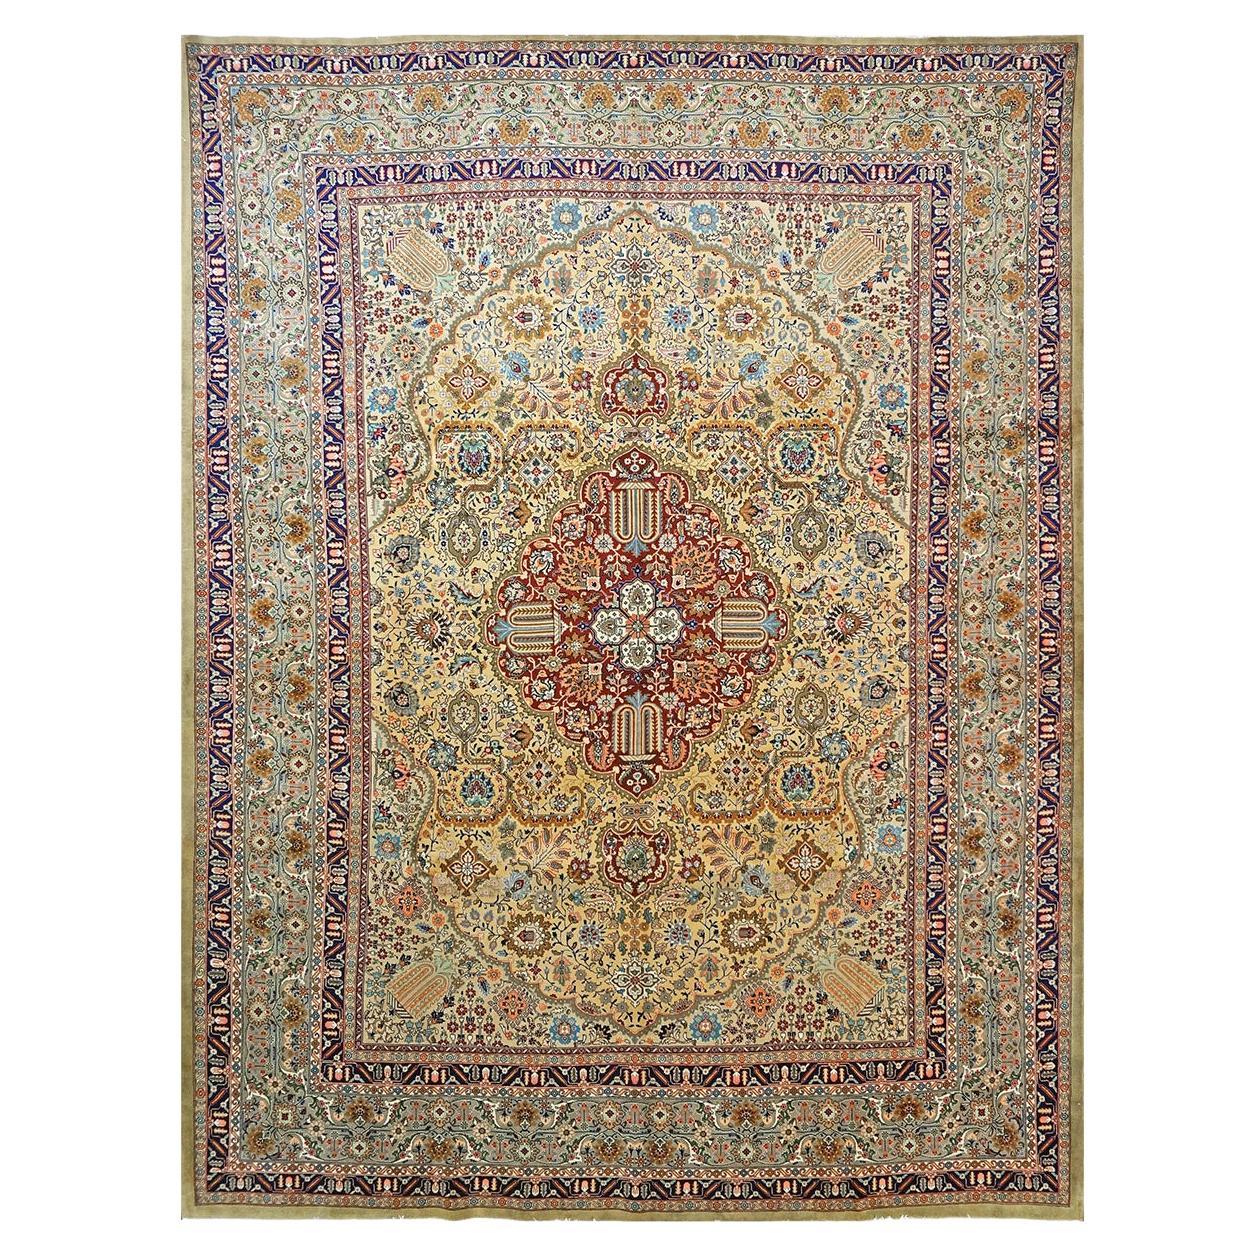 Antique Persian Tabriz 10x13 Tan, Taupe, Navy, & Gold Handmade Area Rug